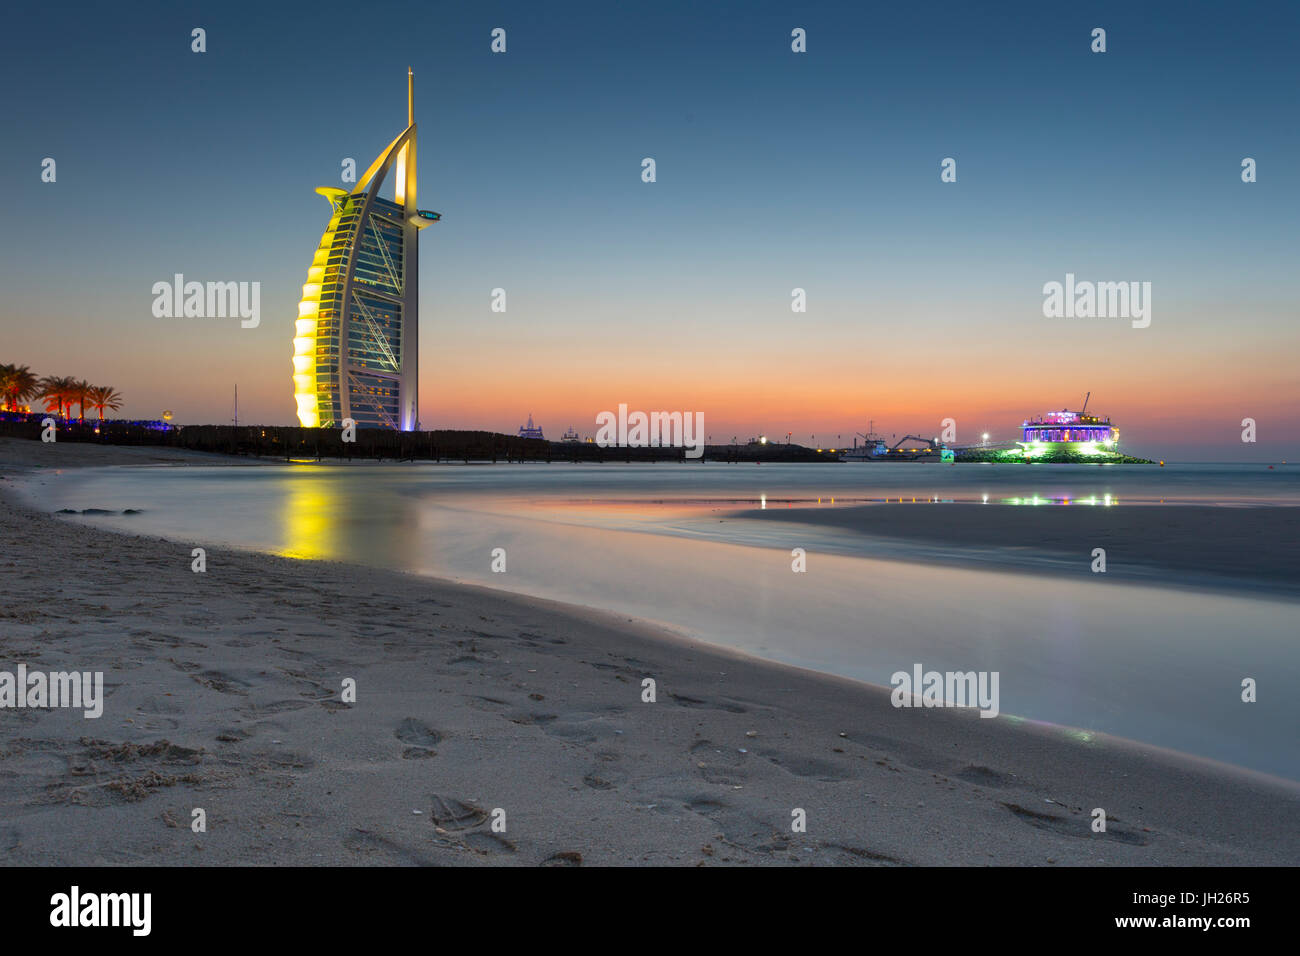 Burj Al Arab Hotel after sunset on Jumeirah Beach, Dubai, United Arab Emirates, Middle East Stock Photo